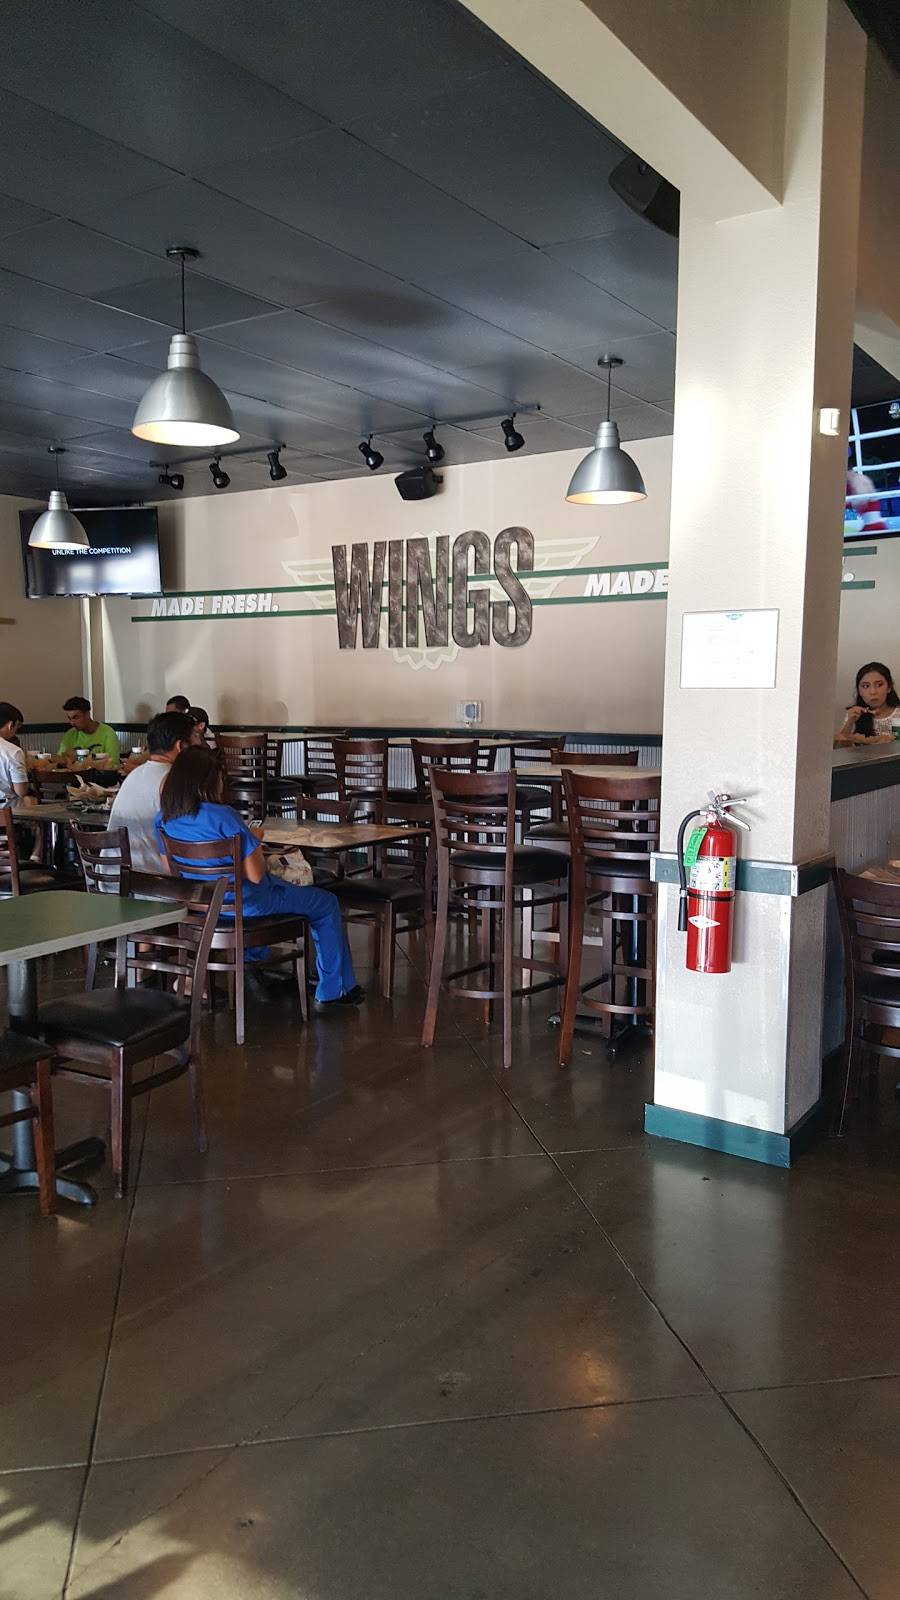 Wingstop | restaurant | 5052 West Ln Ste 4L, Stockton, CA 95210, USA | 2094778207 OR +1 209-477-8207